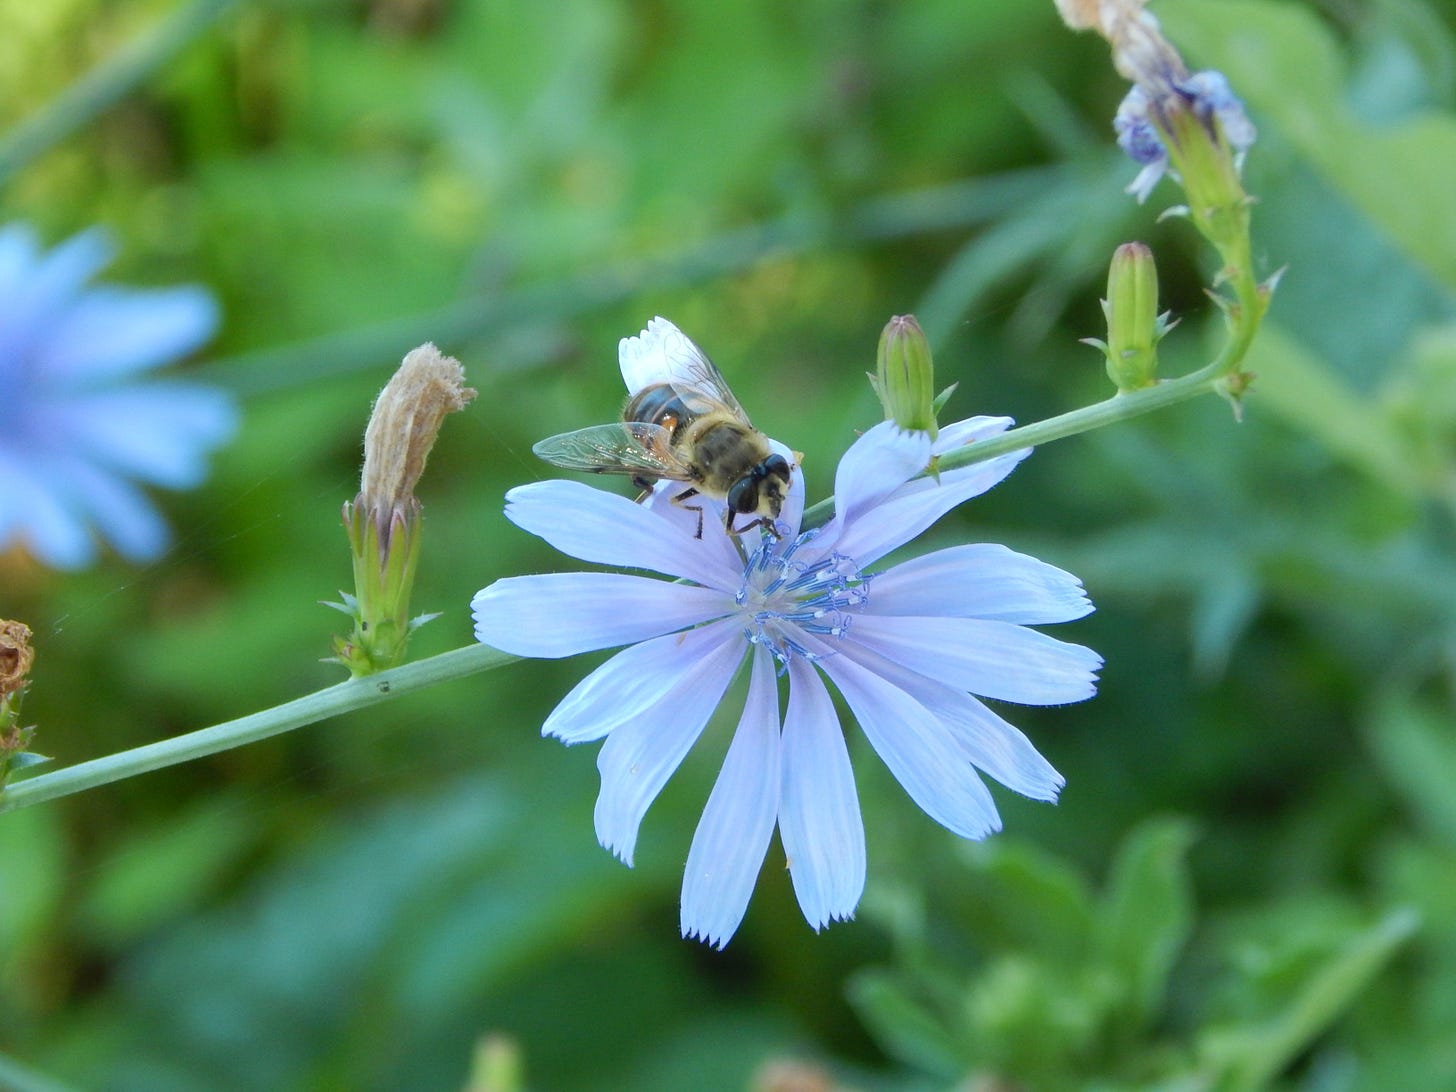 a honeybee on a white flower